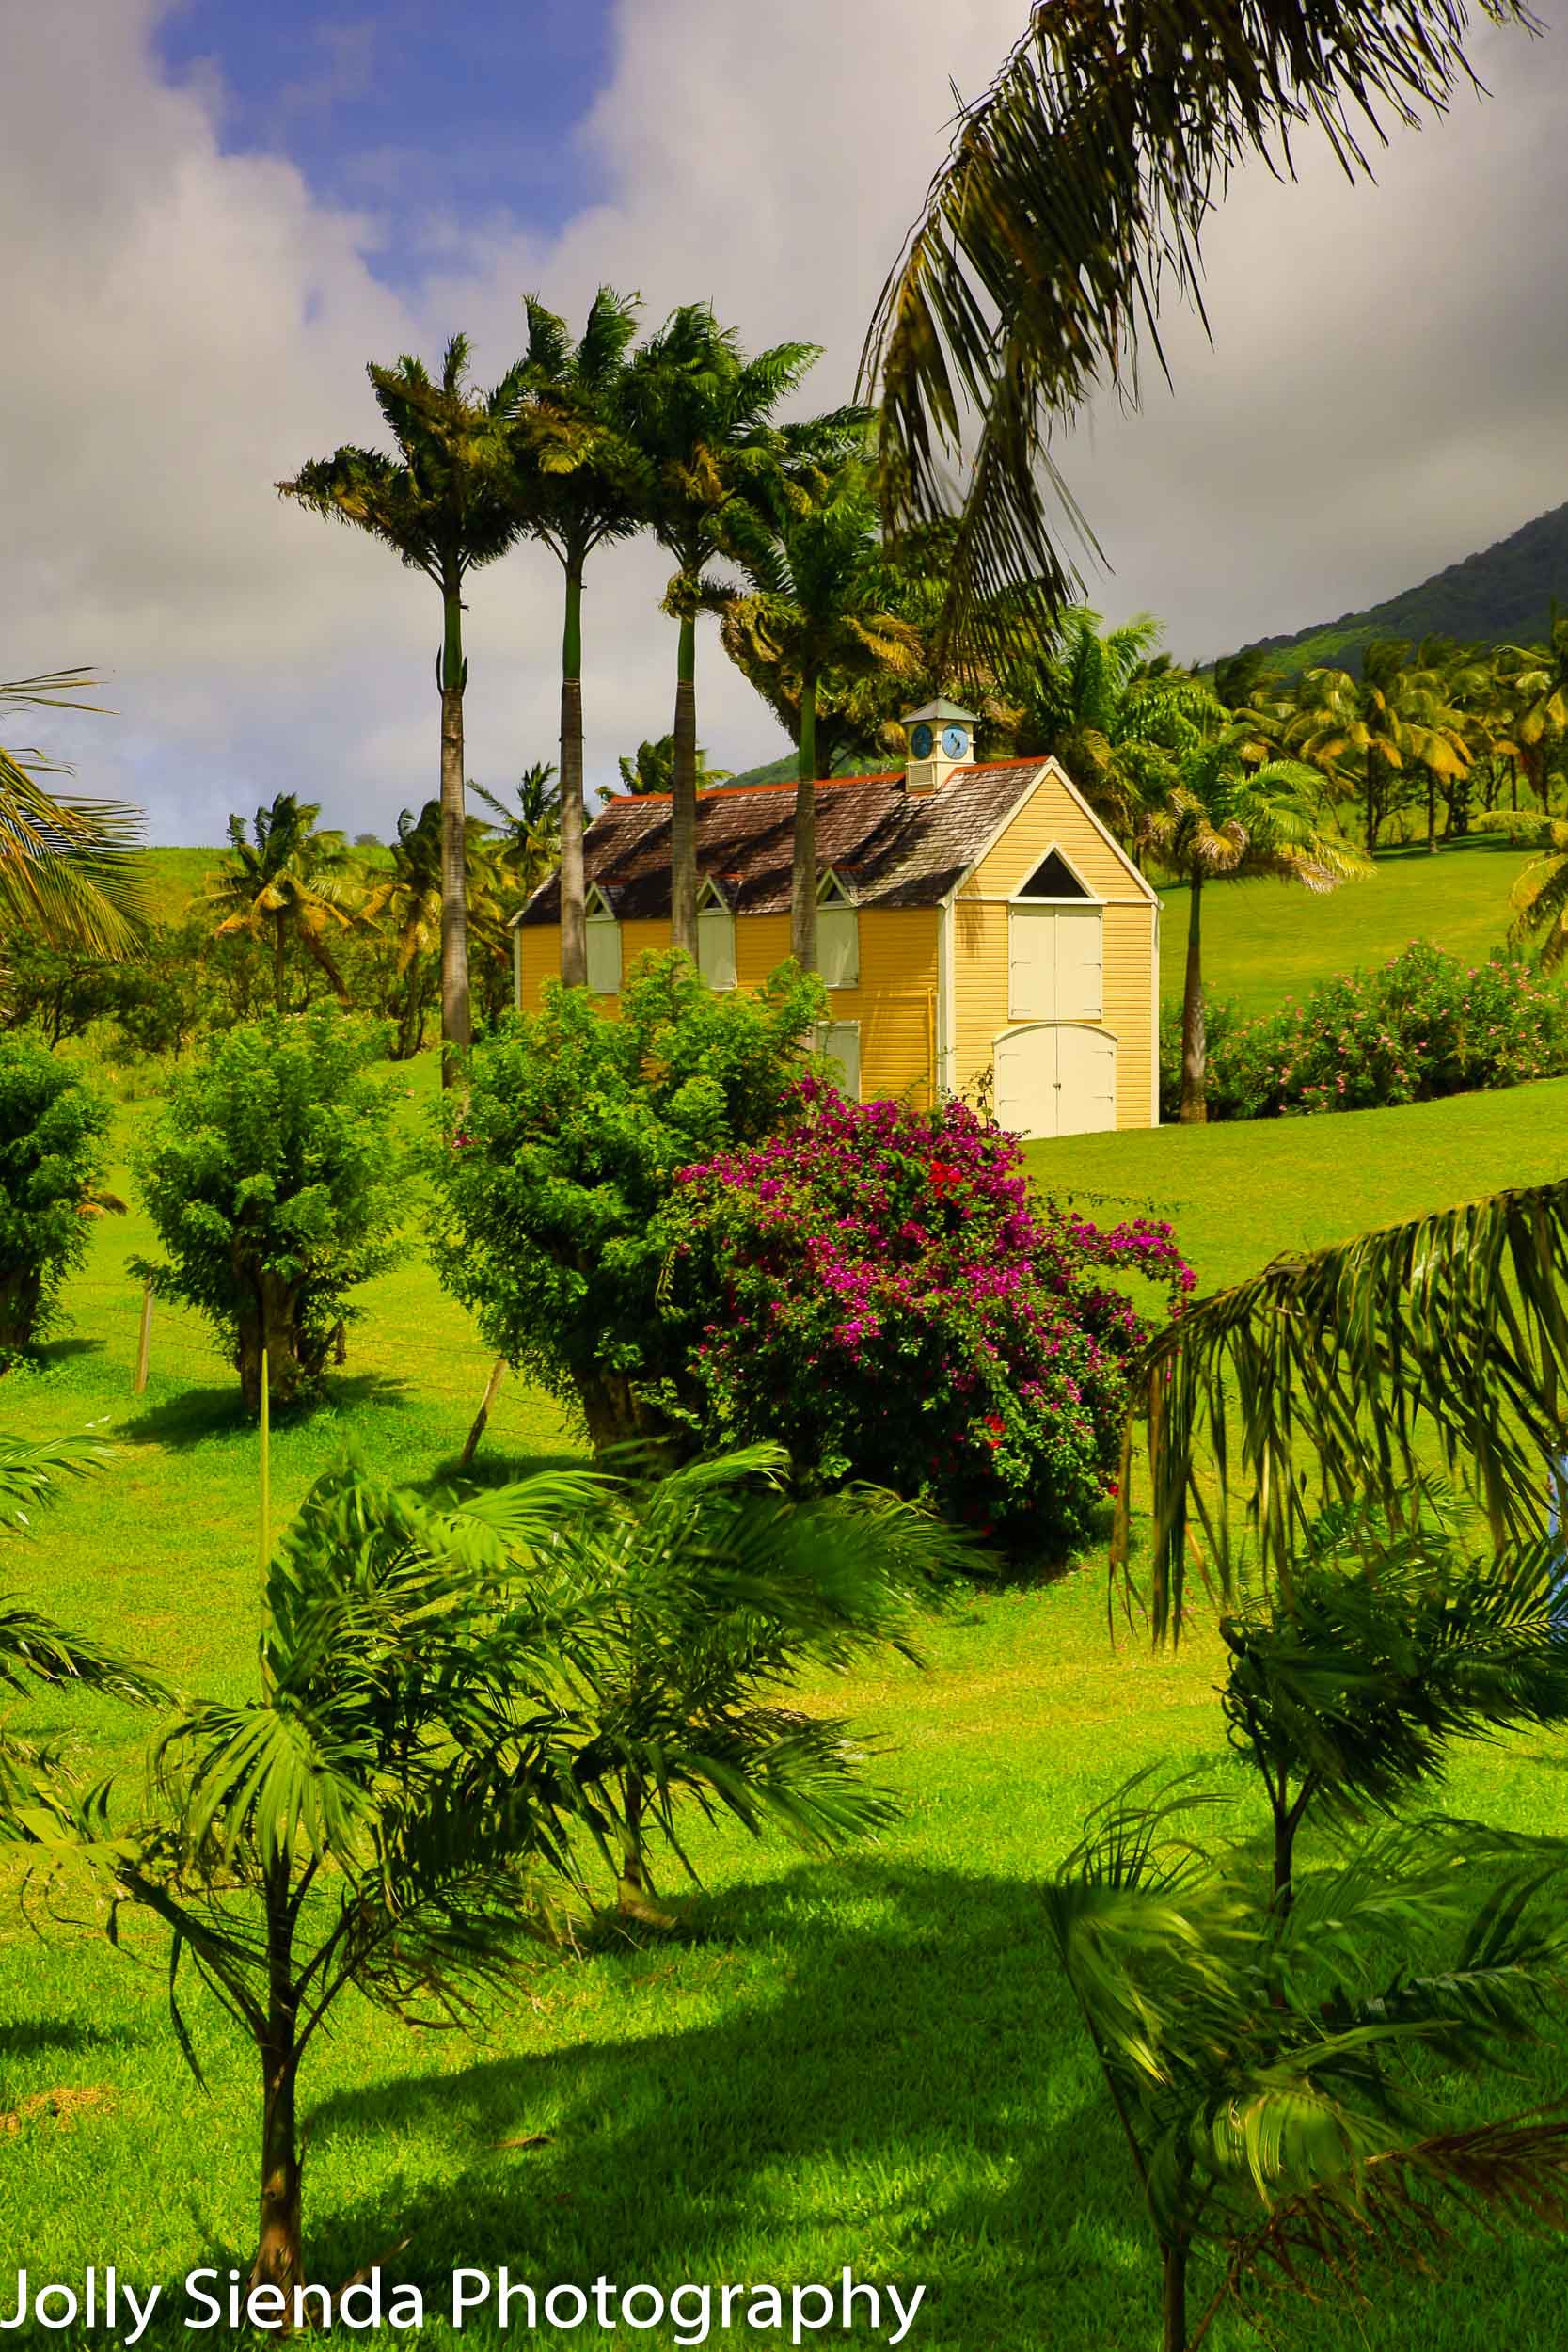 The Yellow Caribbean Barn on St. Kitts